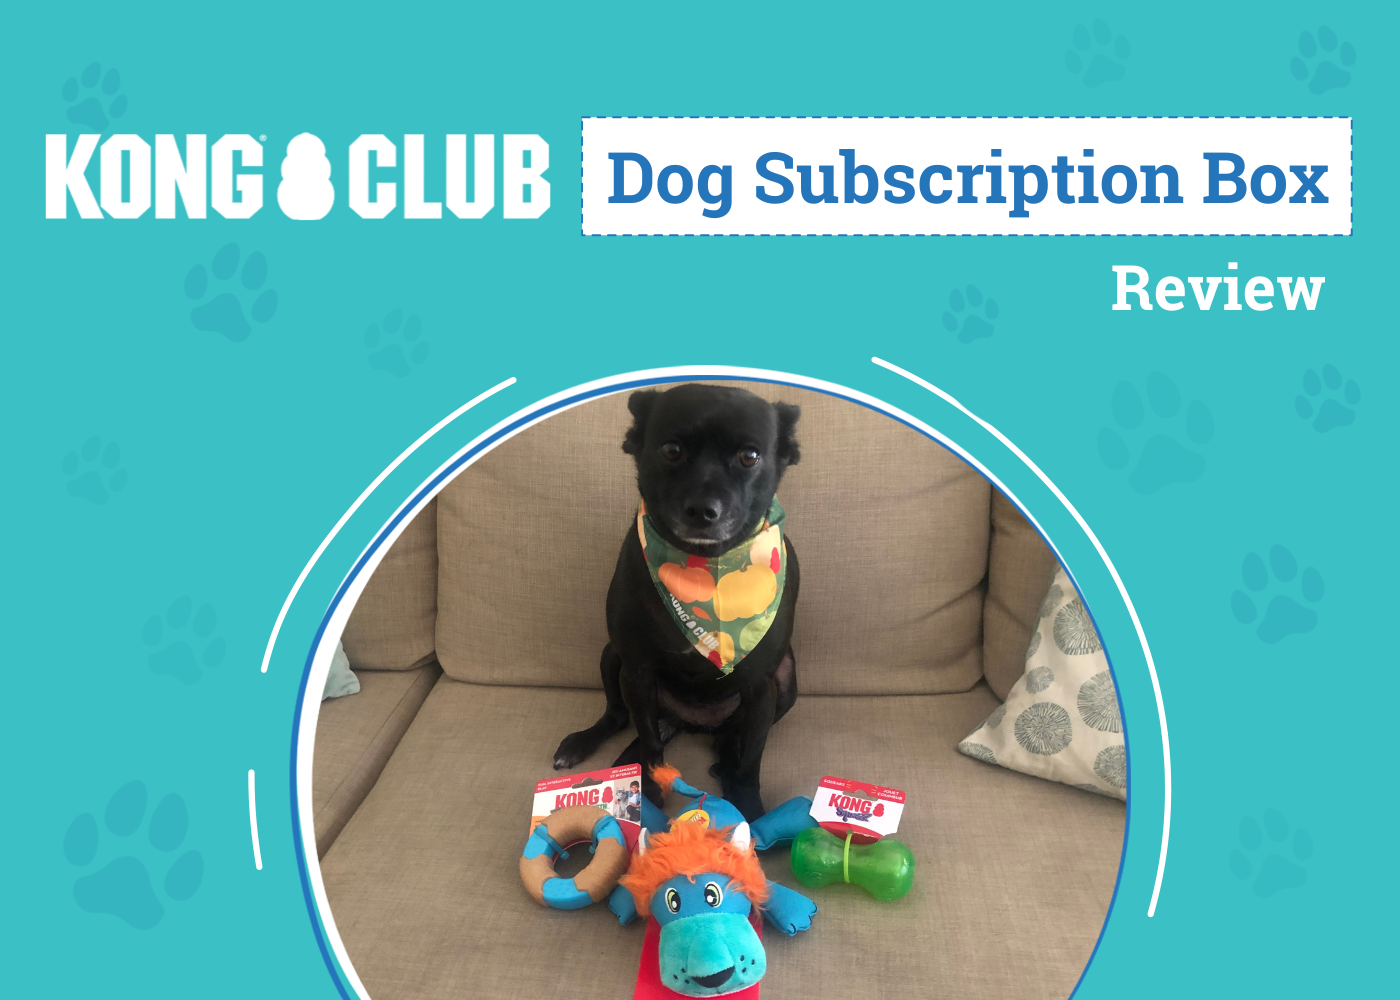 DOG_SAPR_Kong Club Dog Subscription box